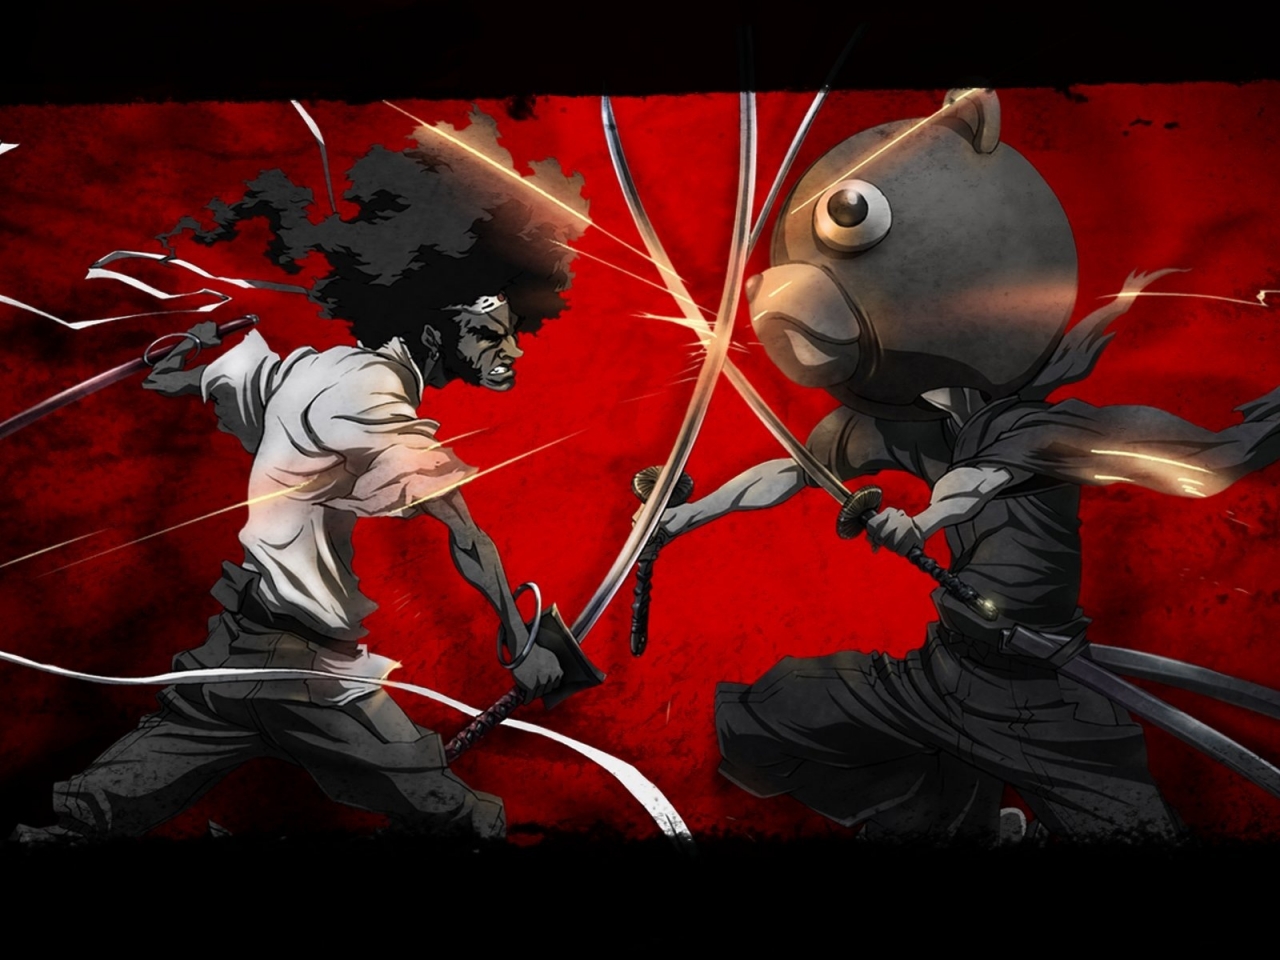 Afro Samurai vs Kuma for 1280 x 960 resolution